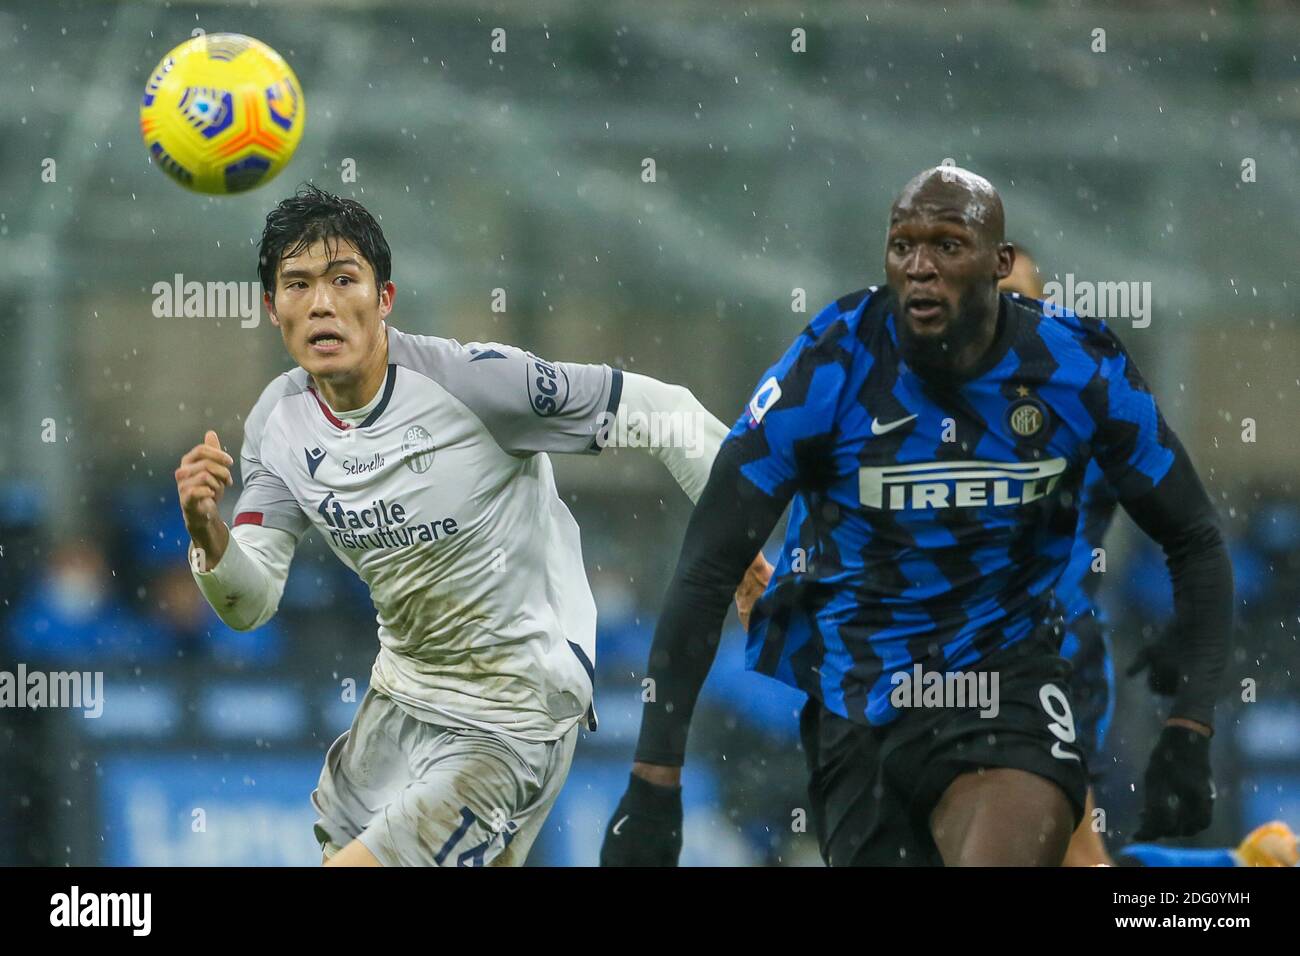 MILAN, ITALIE - DÉCEMBRE 5 : Takehiro Tomiyasu de Bologne, Romelu Lukaku de l'Inter Milan pendant la série UN match entre l'Inter Milan et Bologne à Stad Banque D'Images